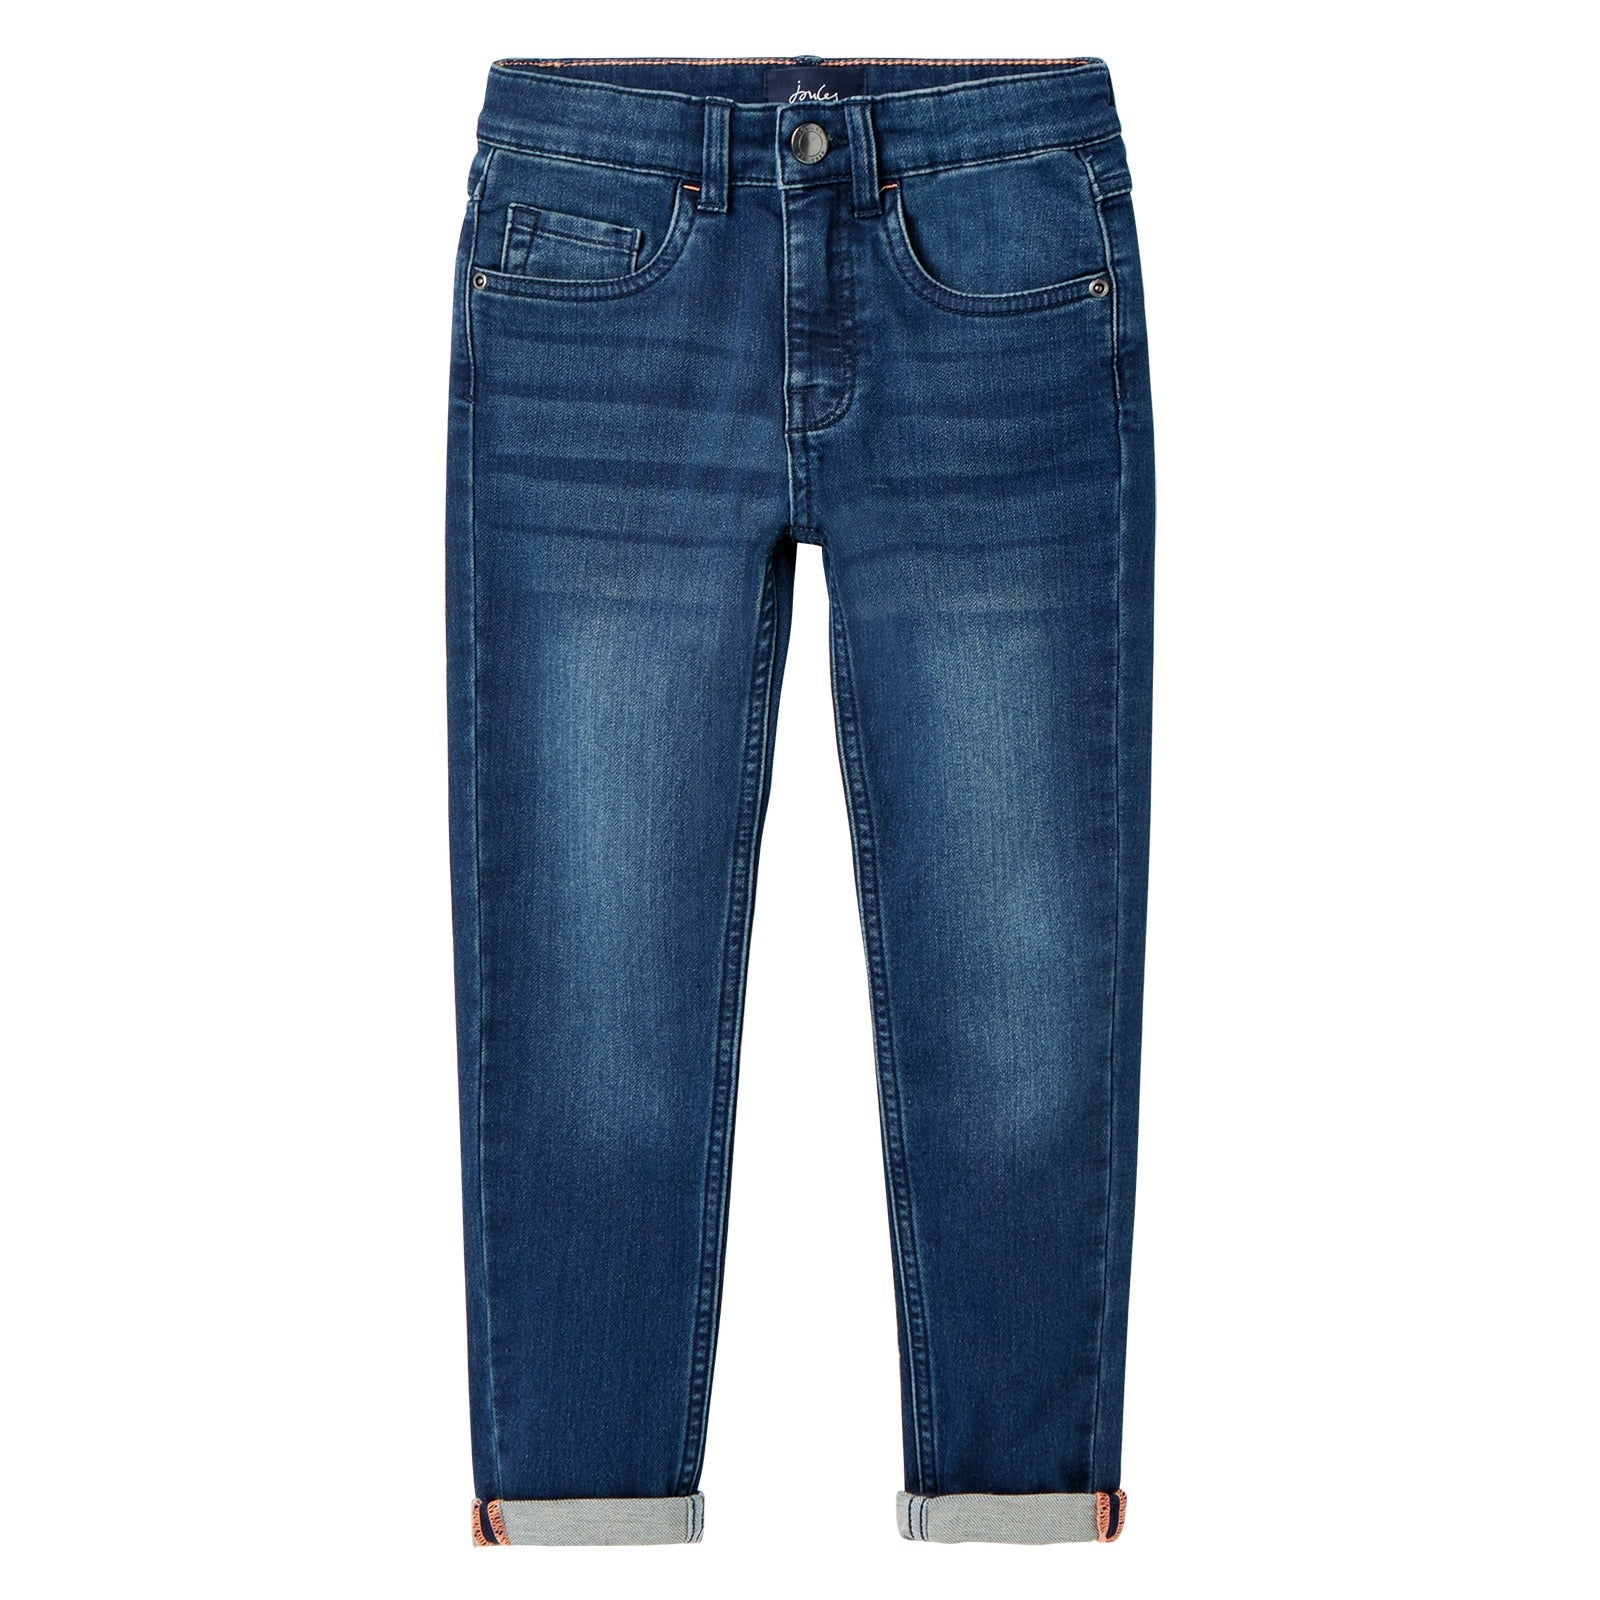 Joules Bradley Jeans 213247 Clothing 4YRS / Mid Denim,5YRS / Mid Denim,6YRS / Mid Denim,7-8YRS / Mid Denim